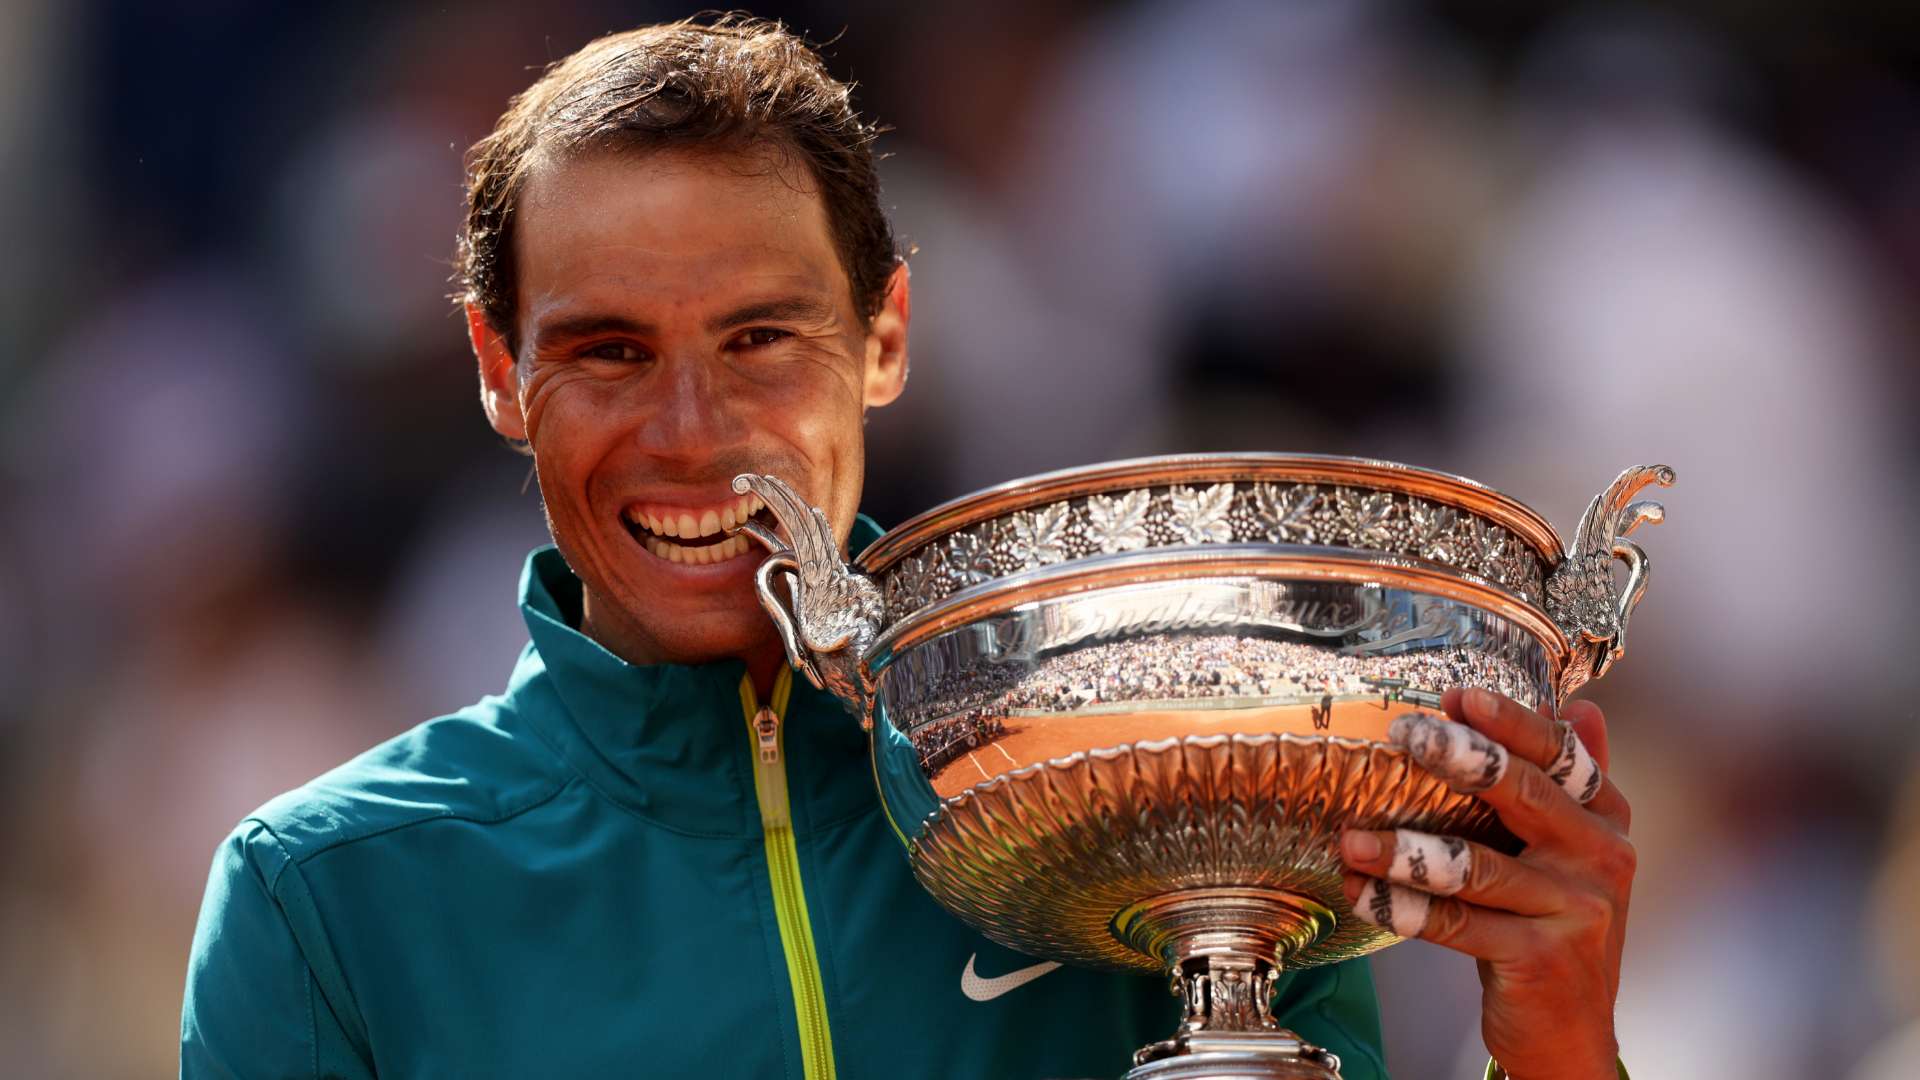 Rafa Nadal French Open